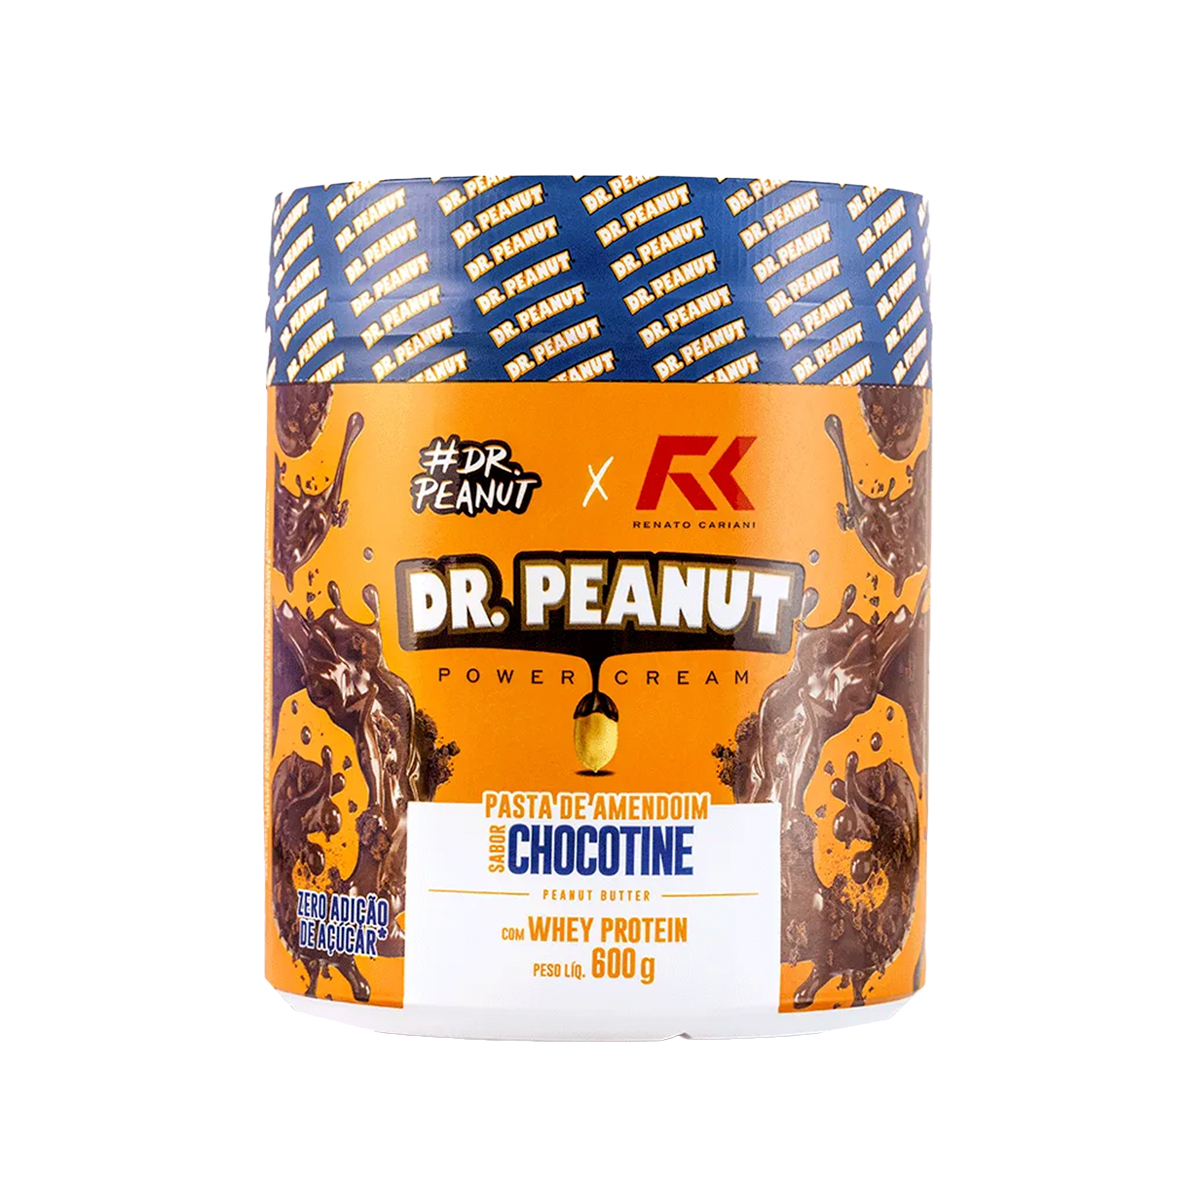 Pasta De Amendoim Chocotine - 600g – Dr. Peanut